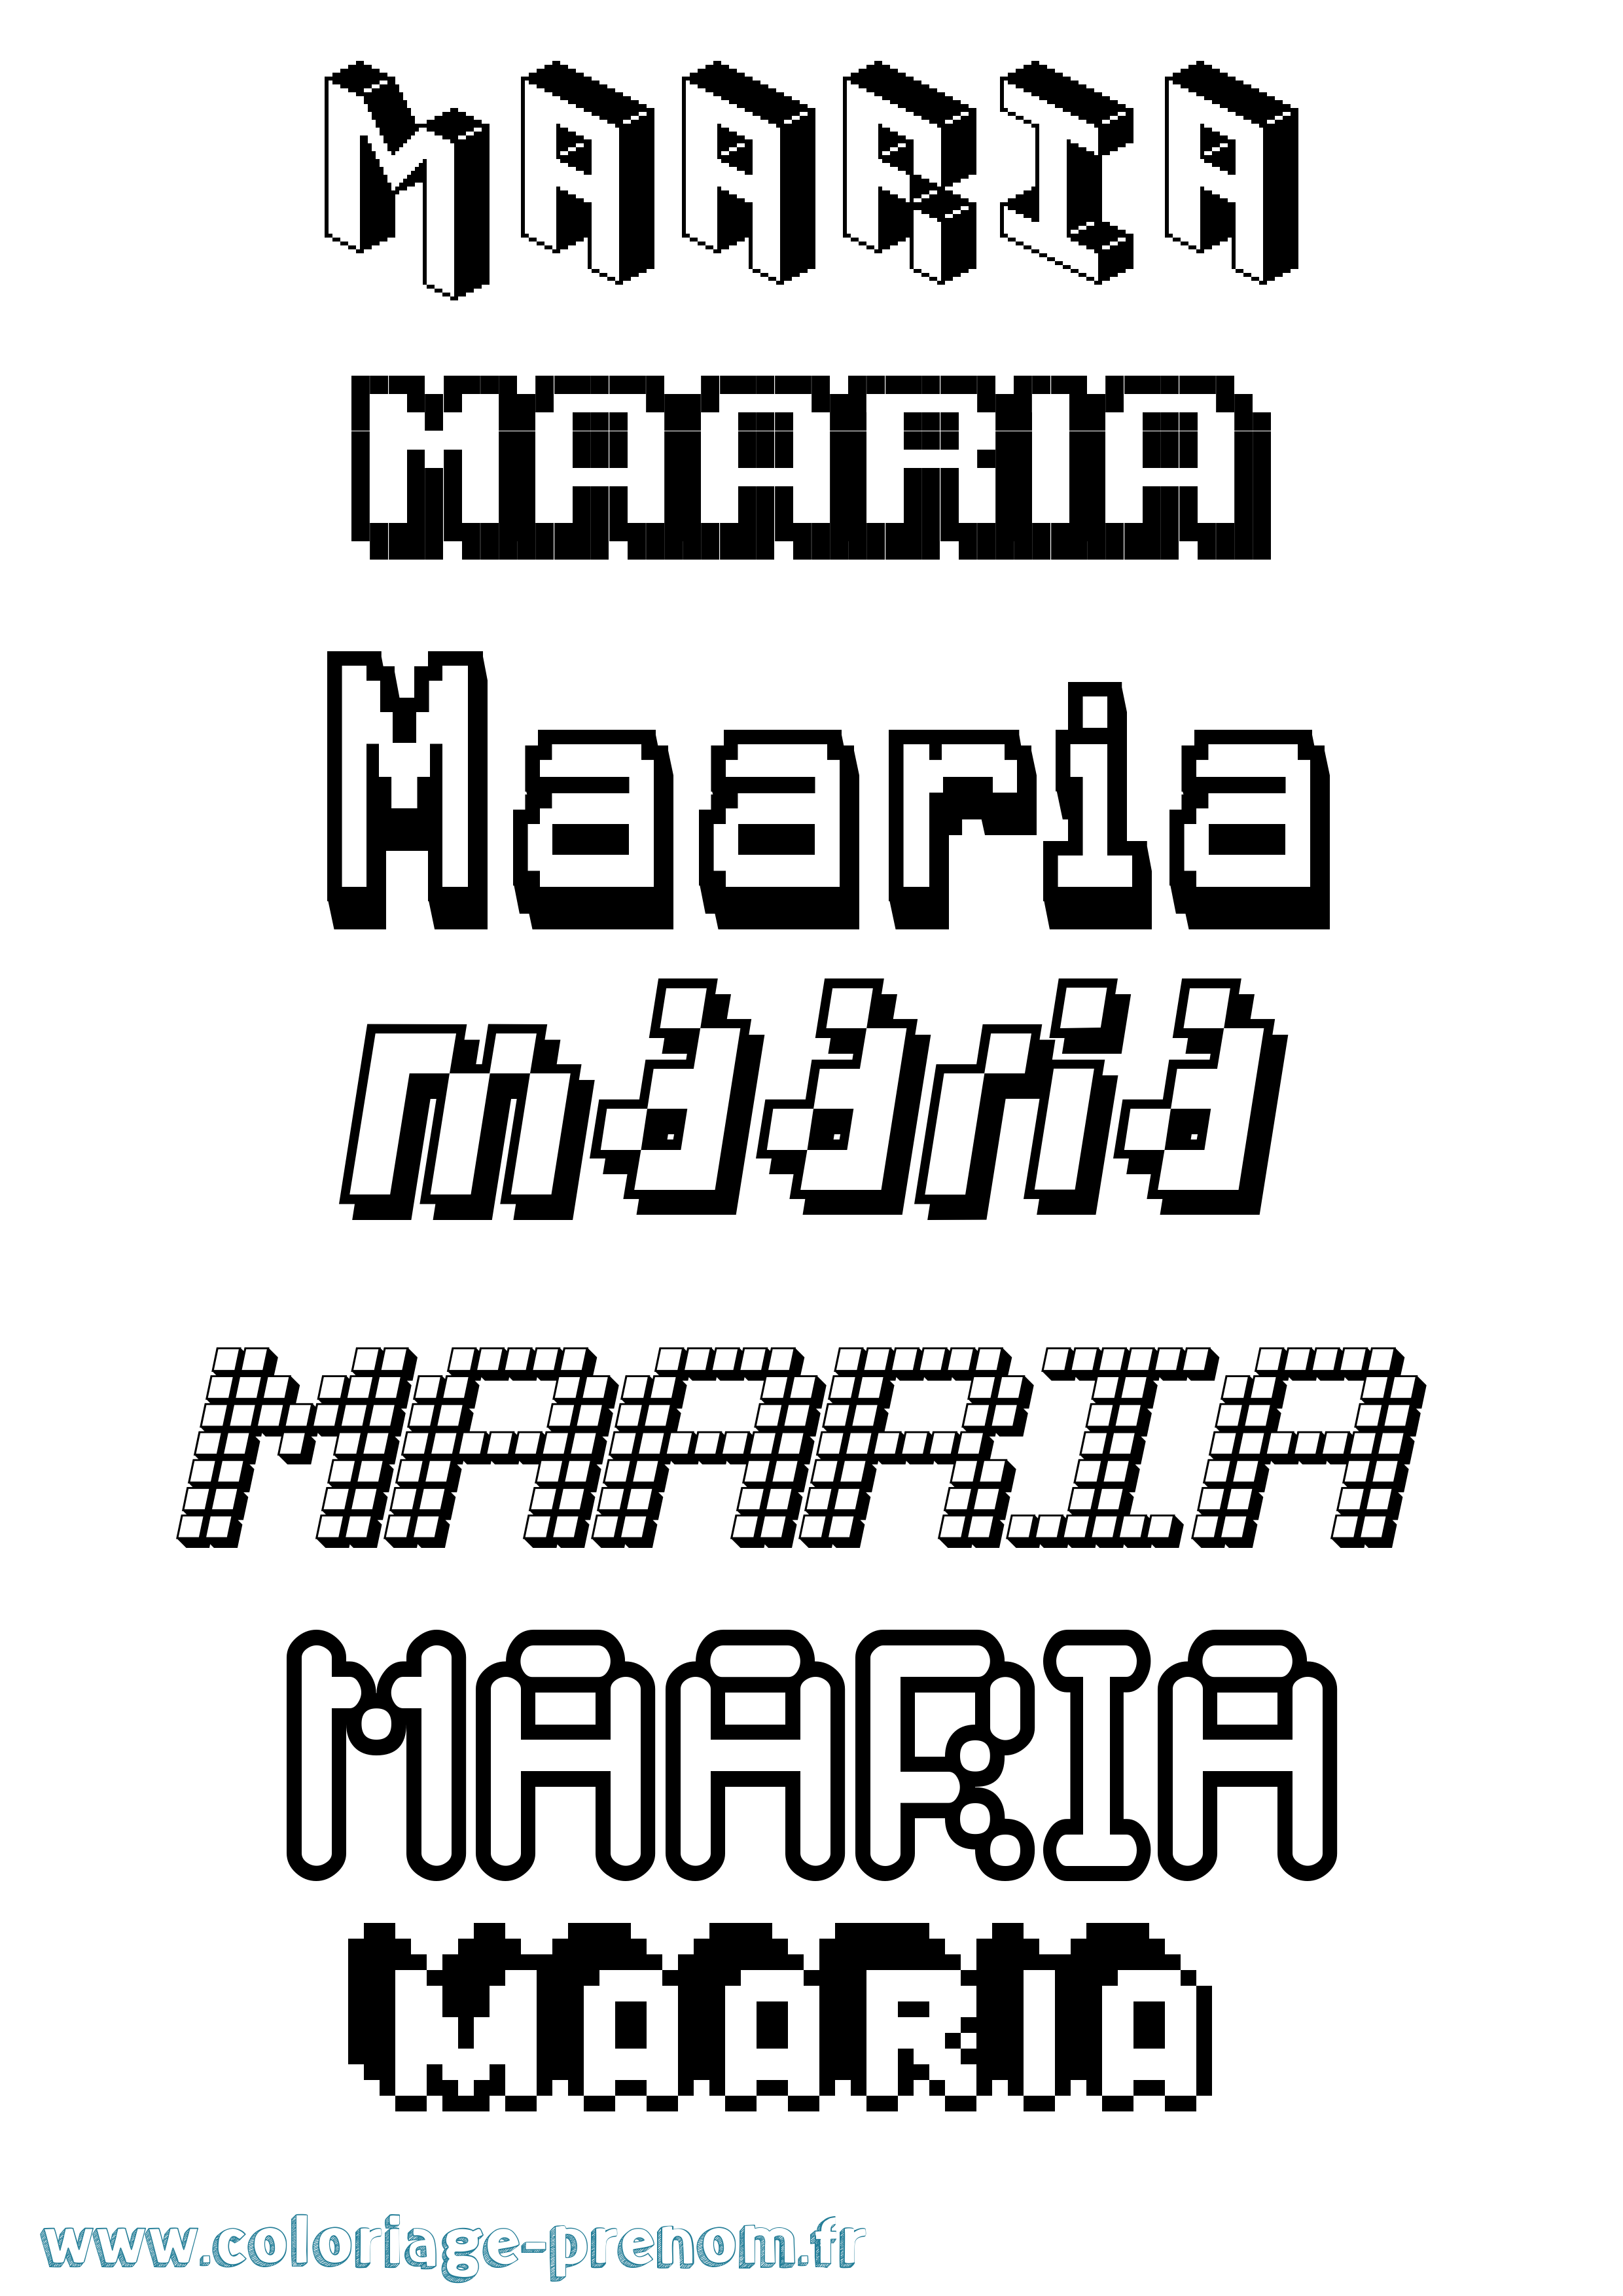 Coloriage prénom Maaria Pixel